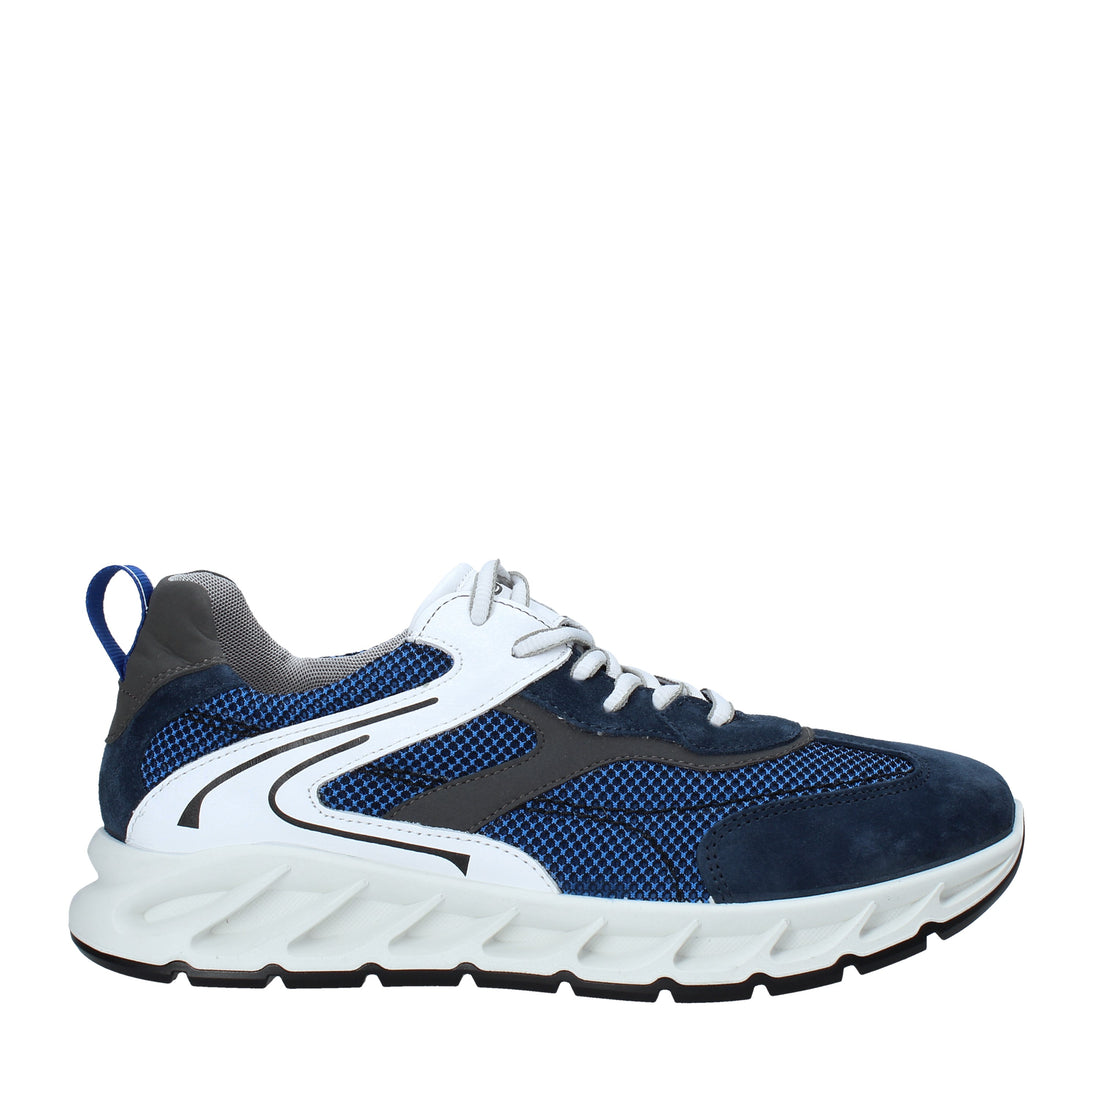 Sneakers Blu Igi&co